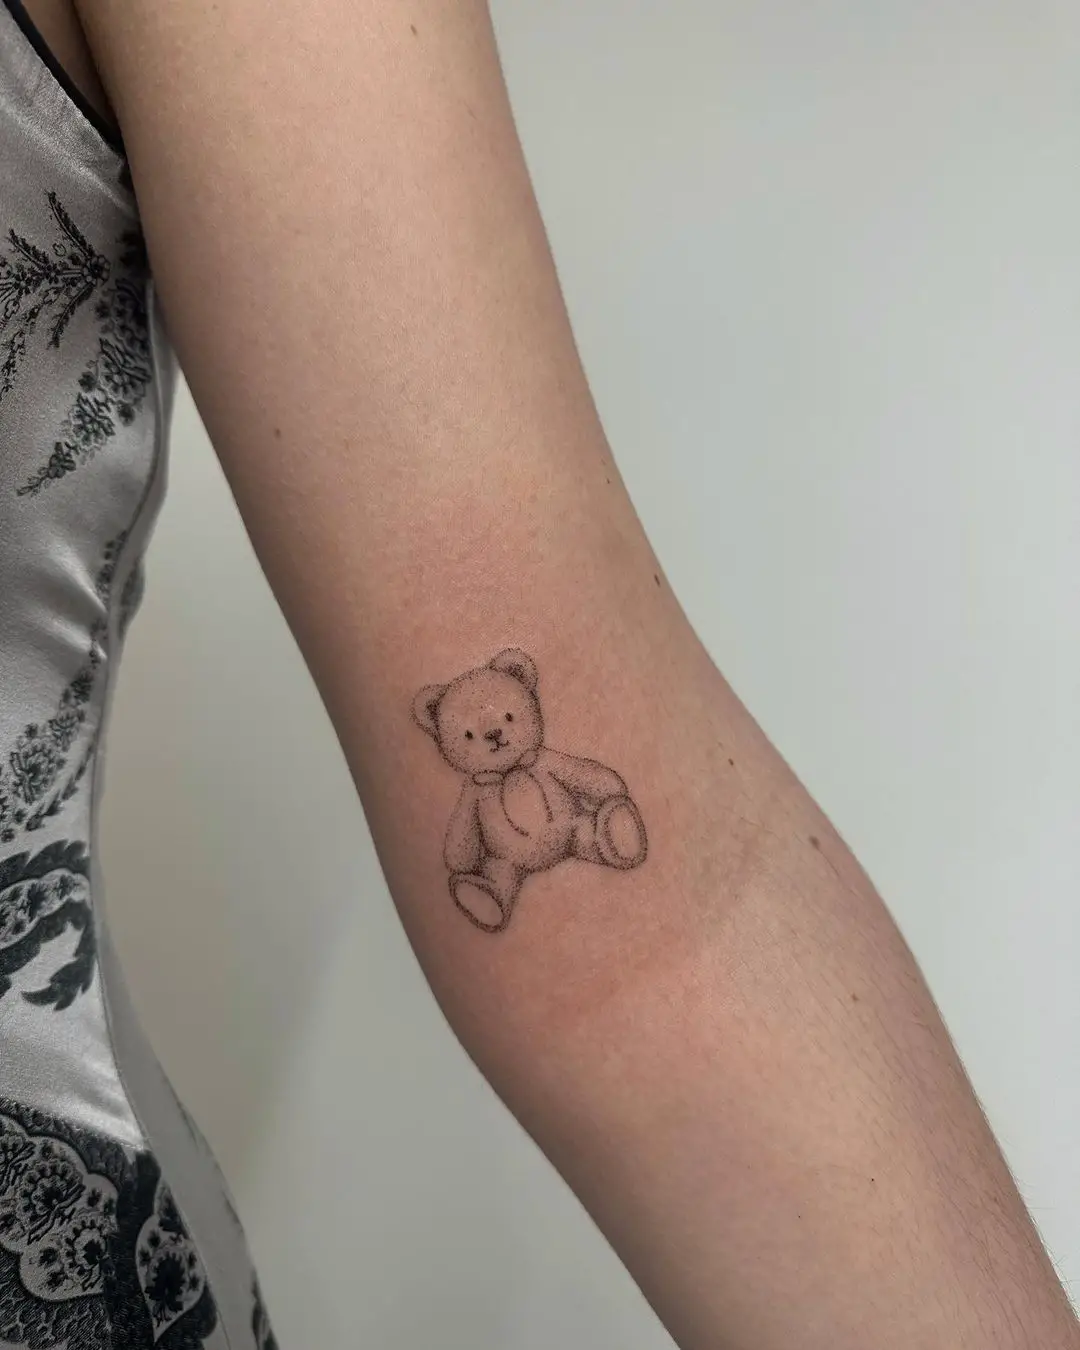 Amazing Teddy tattoo by elises pokedpieces